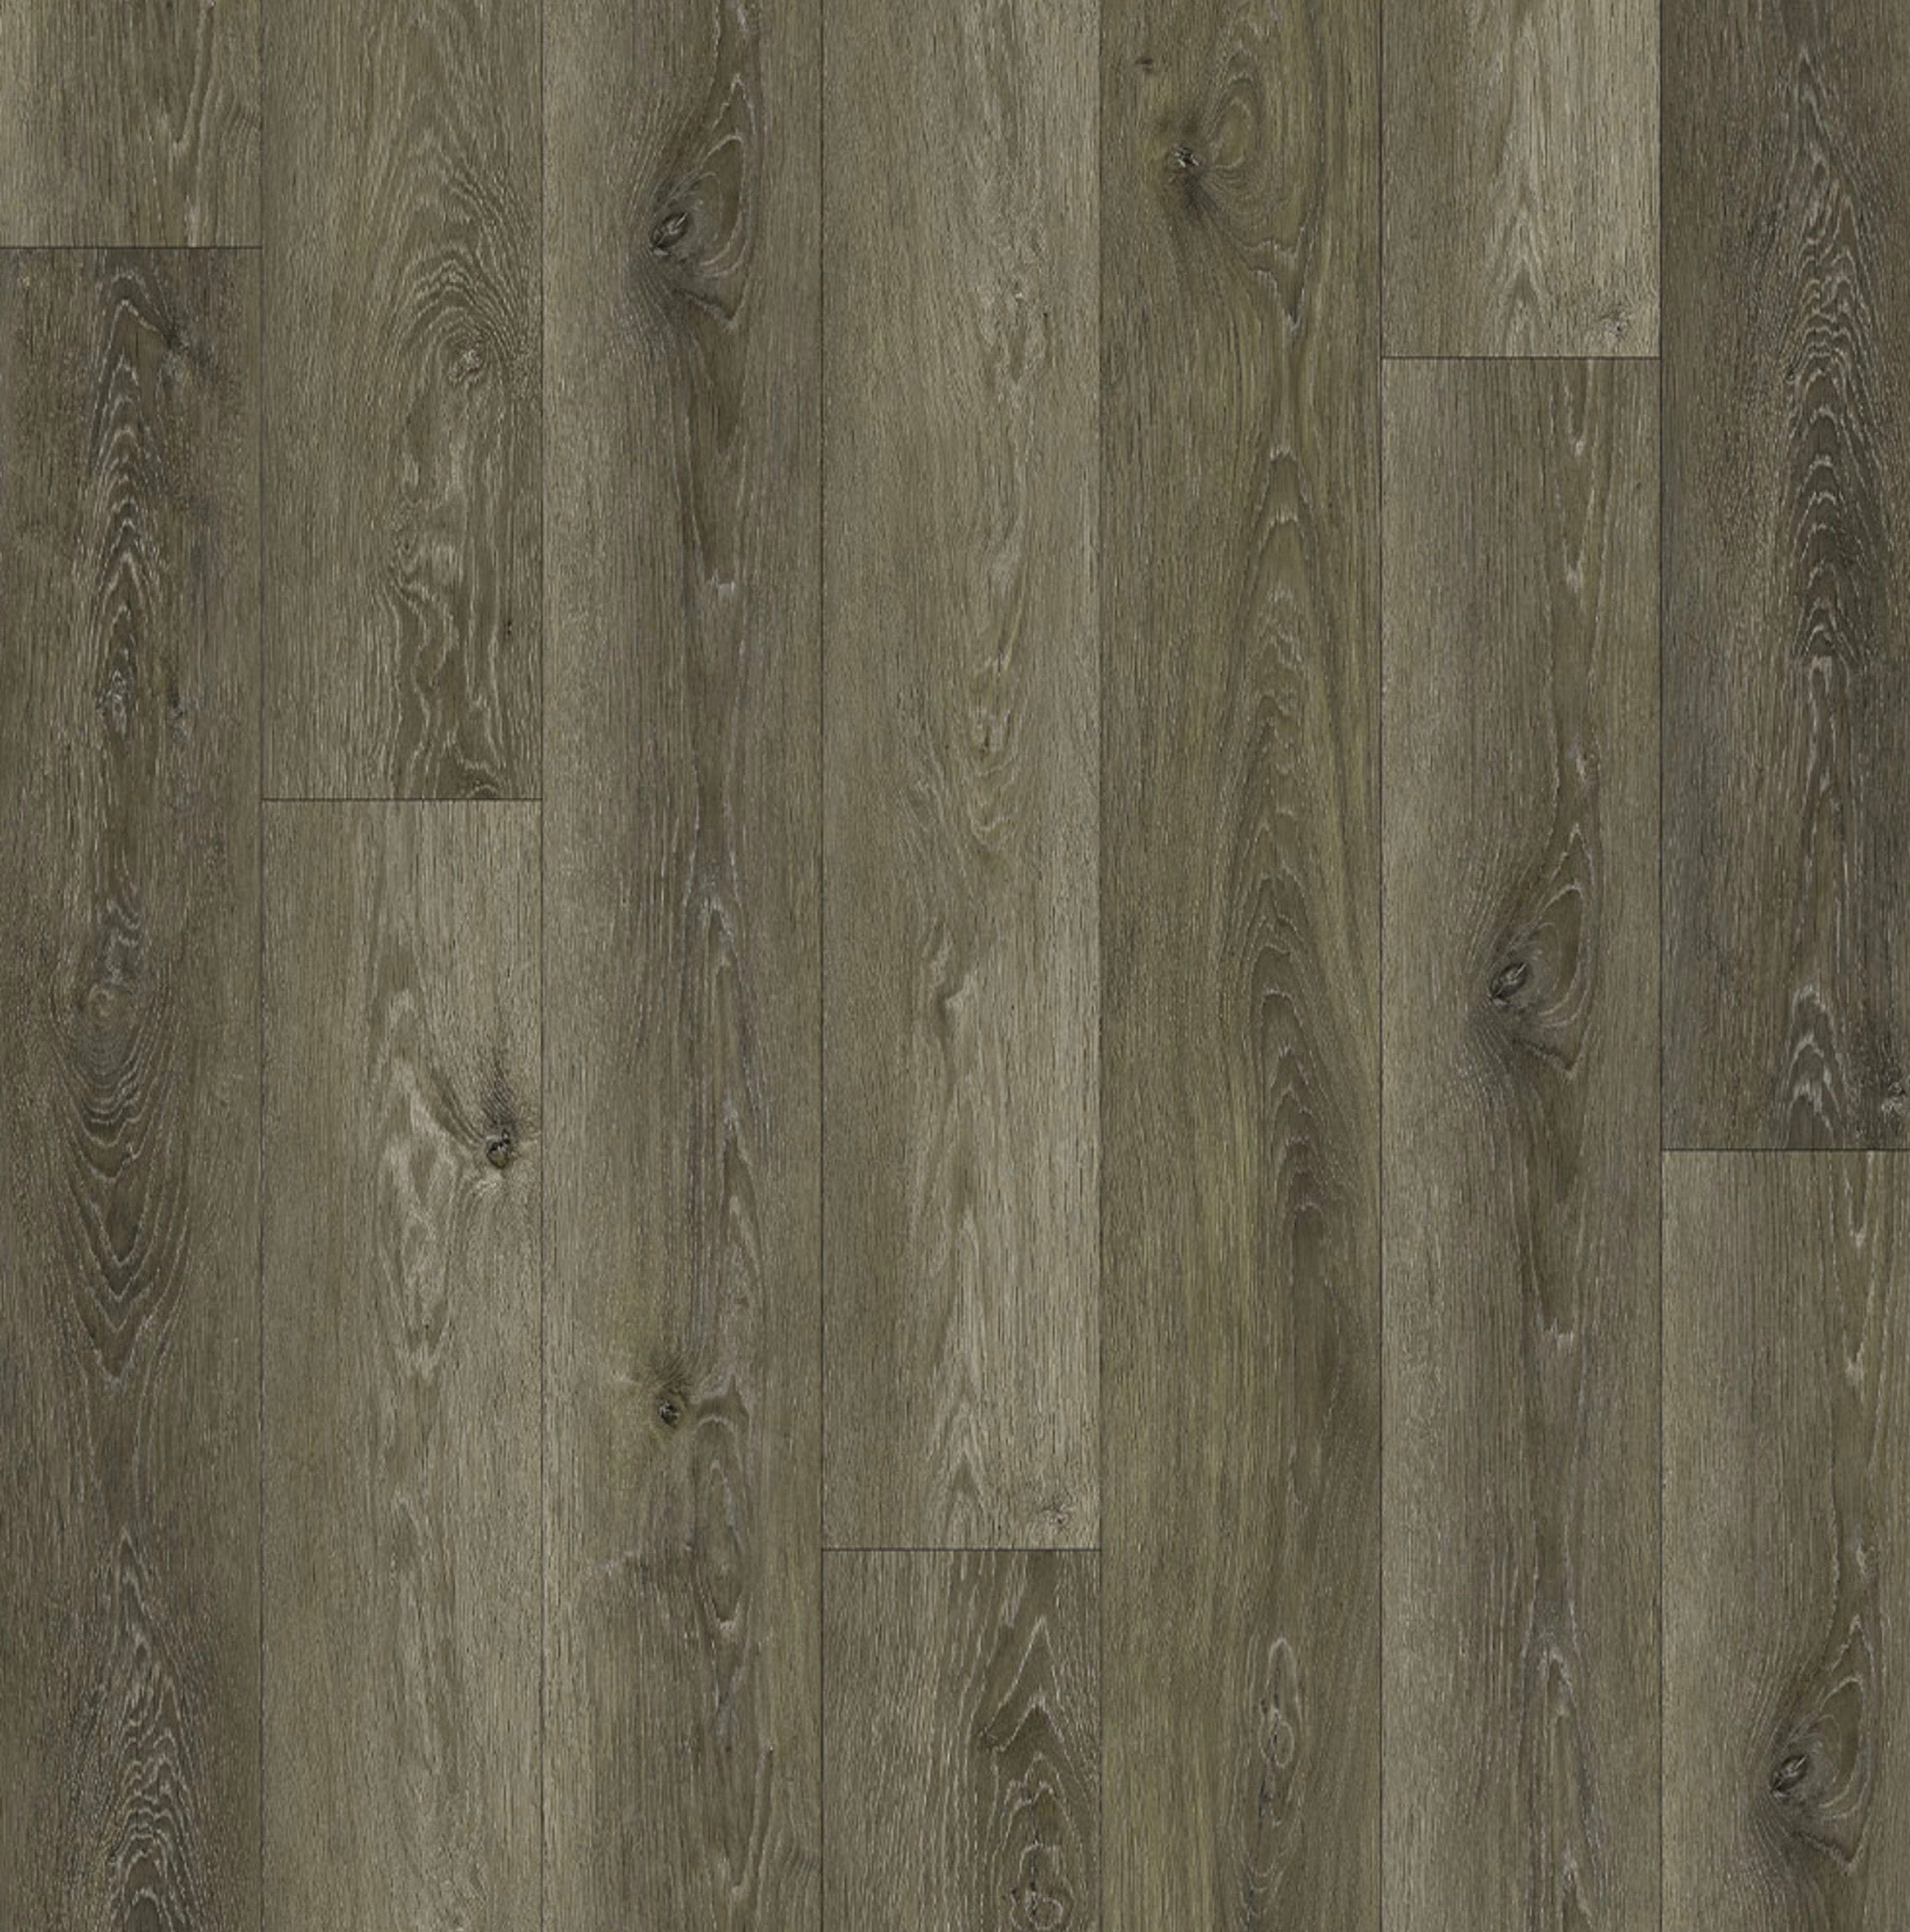 Decorfloor Natural Wood Flooring - Italian Oak